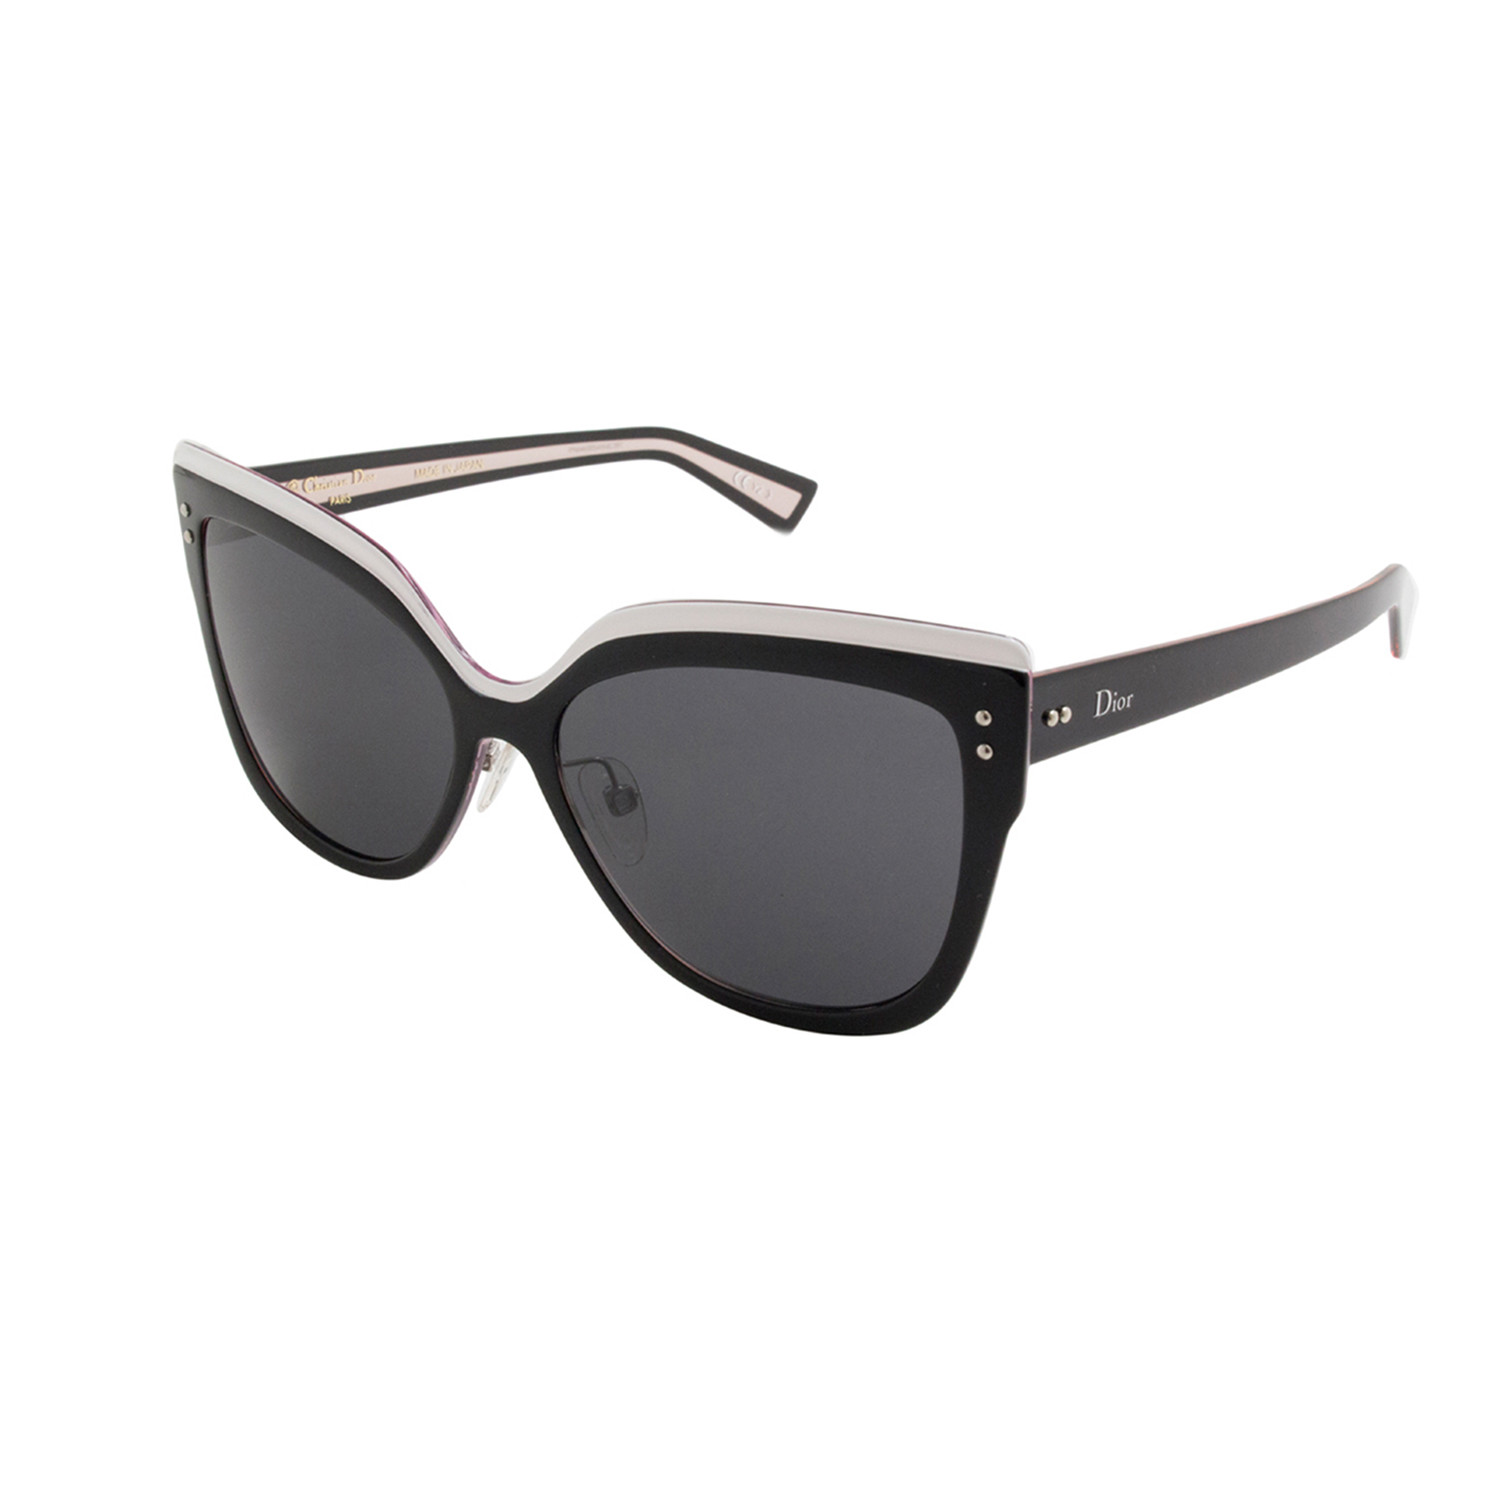 Christian Dior Women S Exquise Sunglasses Black White Designer Sunglasses Touch Of Modern